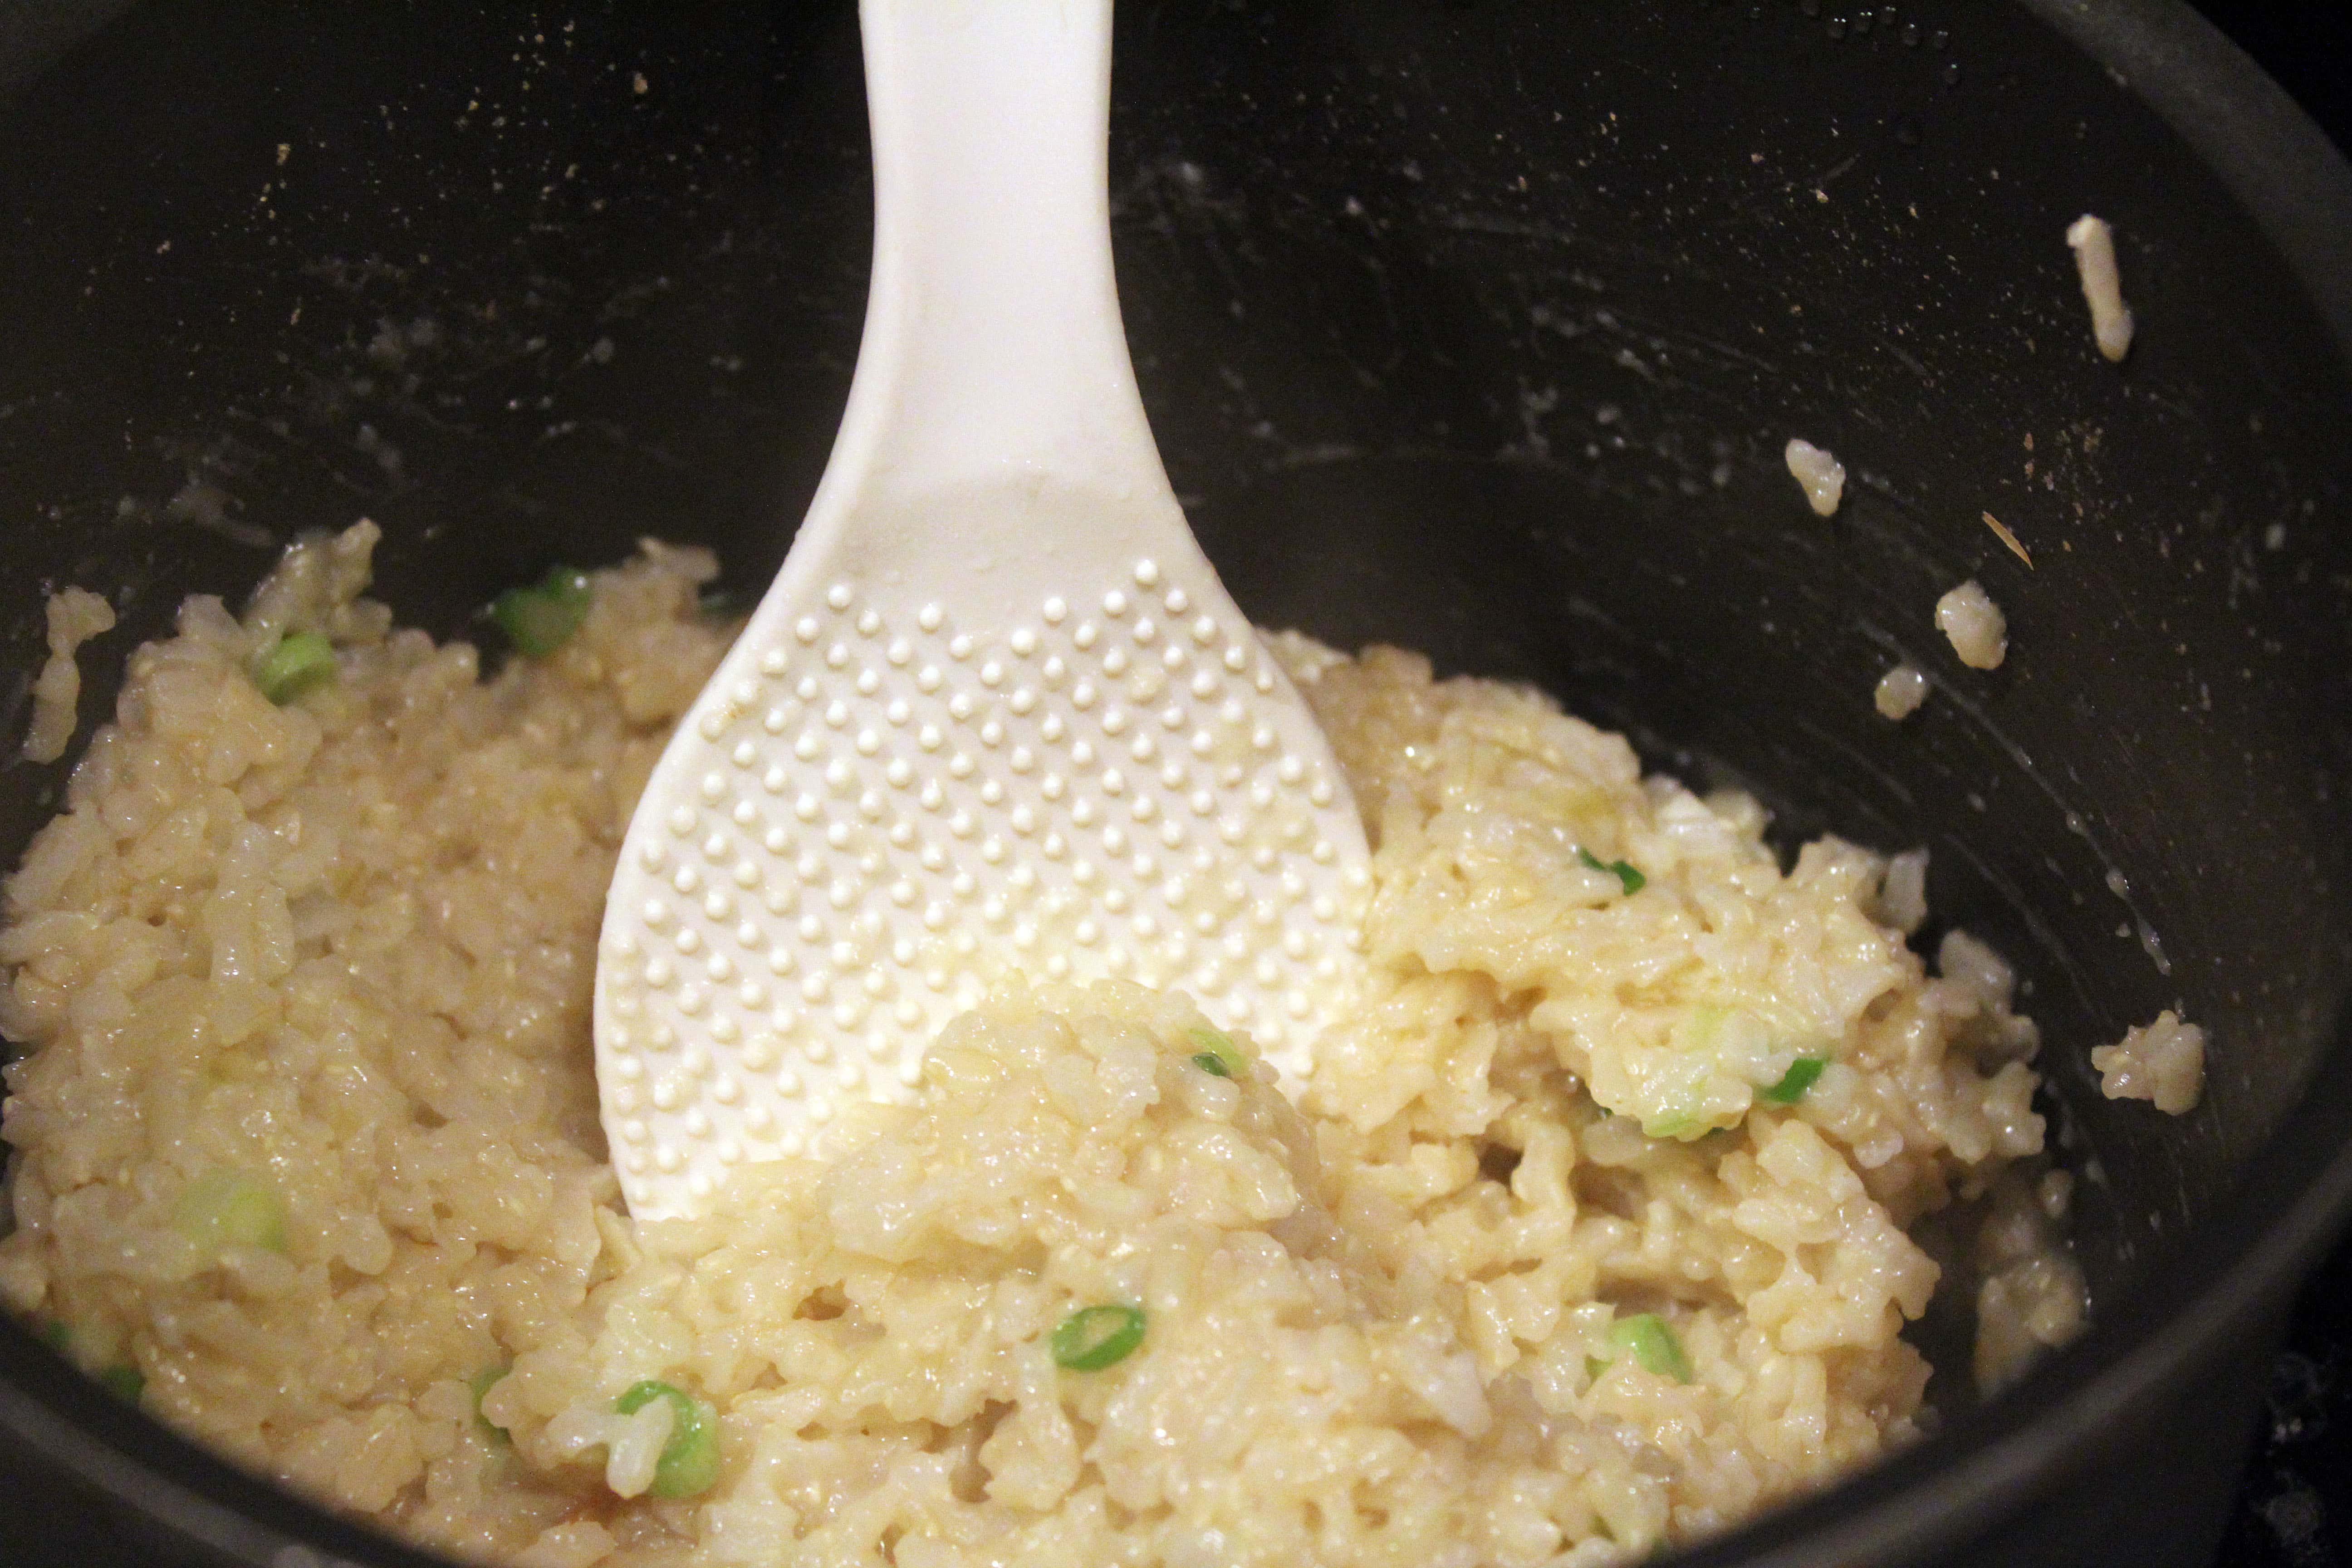 Stir scallions and seasoning into rice